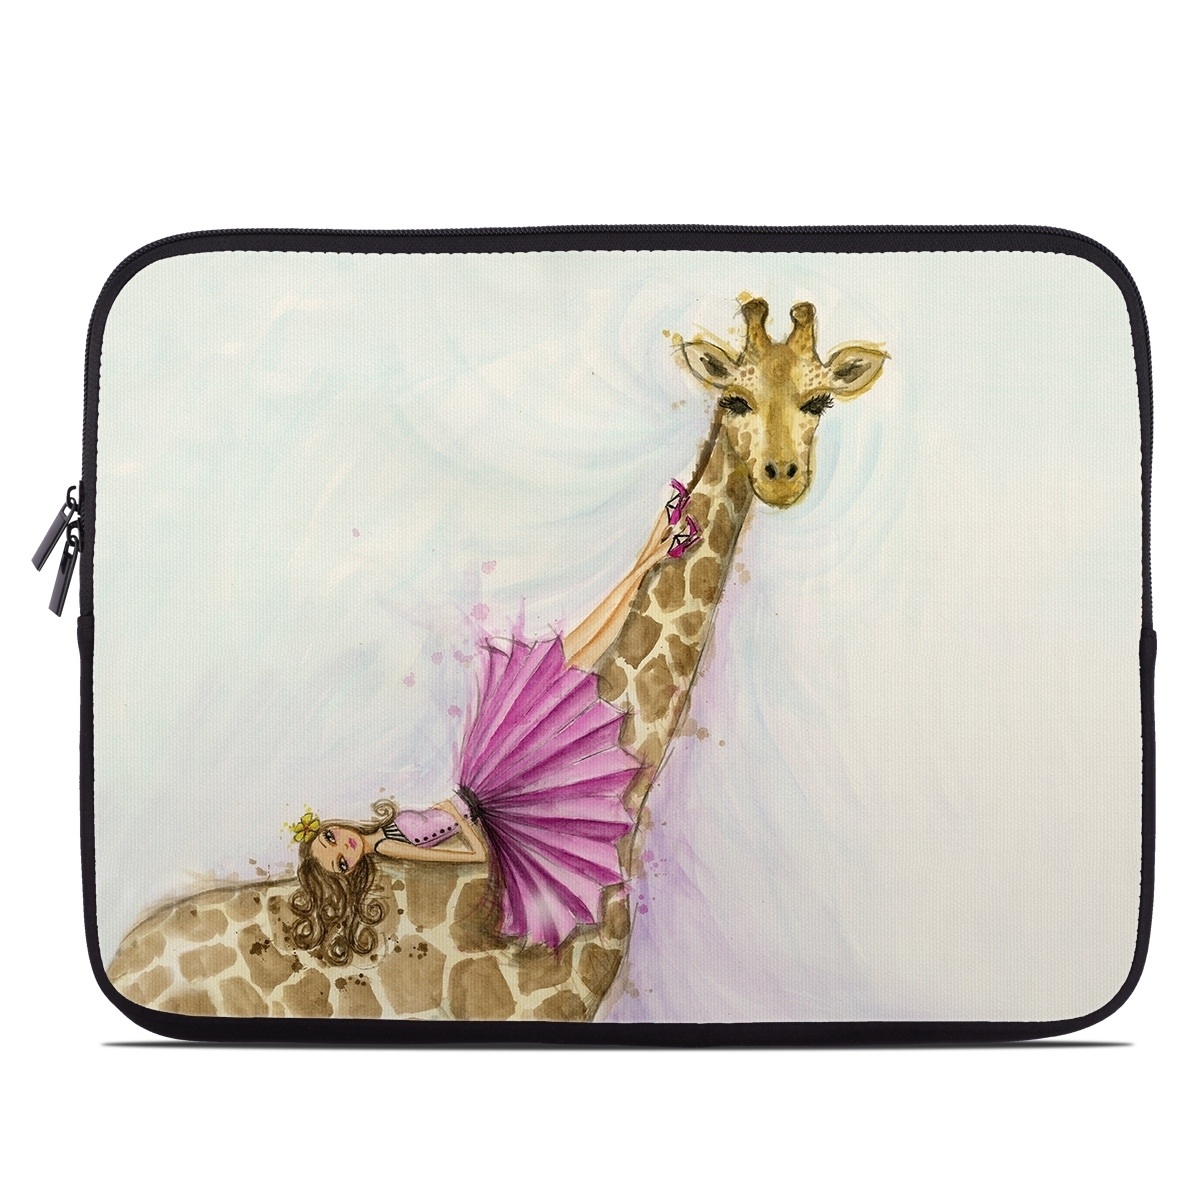 Laptop Sleeve - Lounge Giraffe (Image 1)